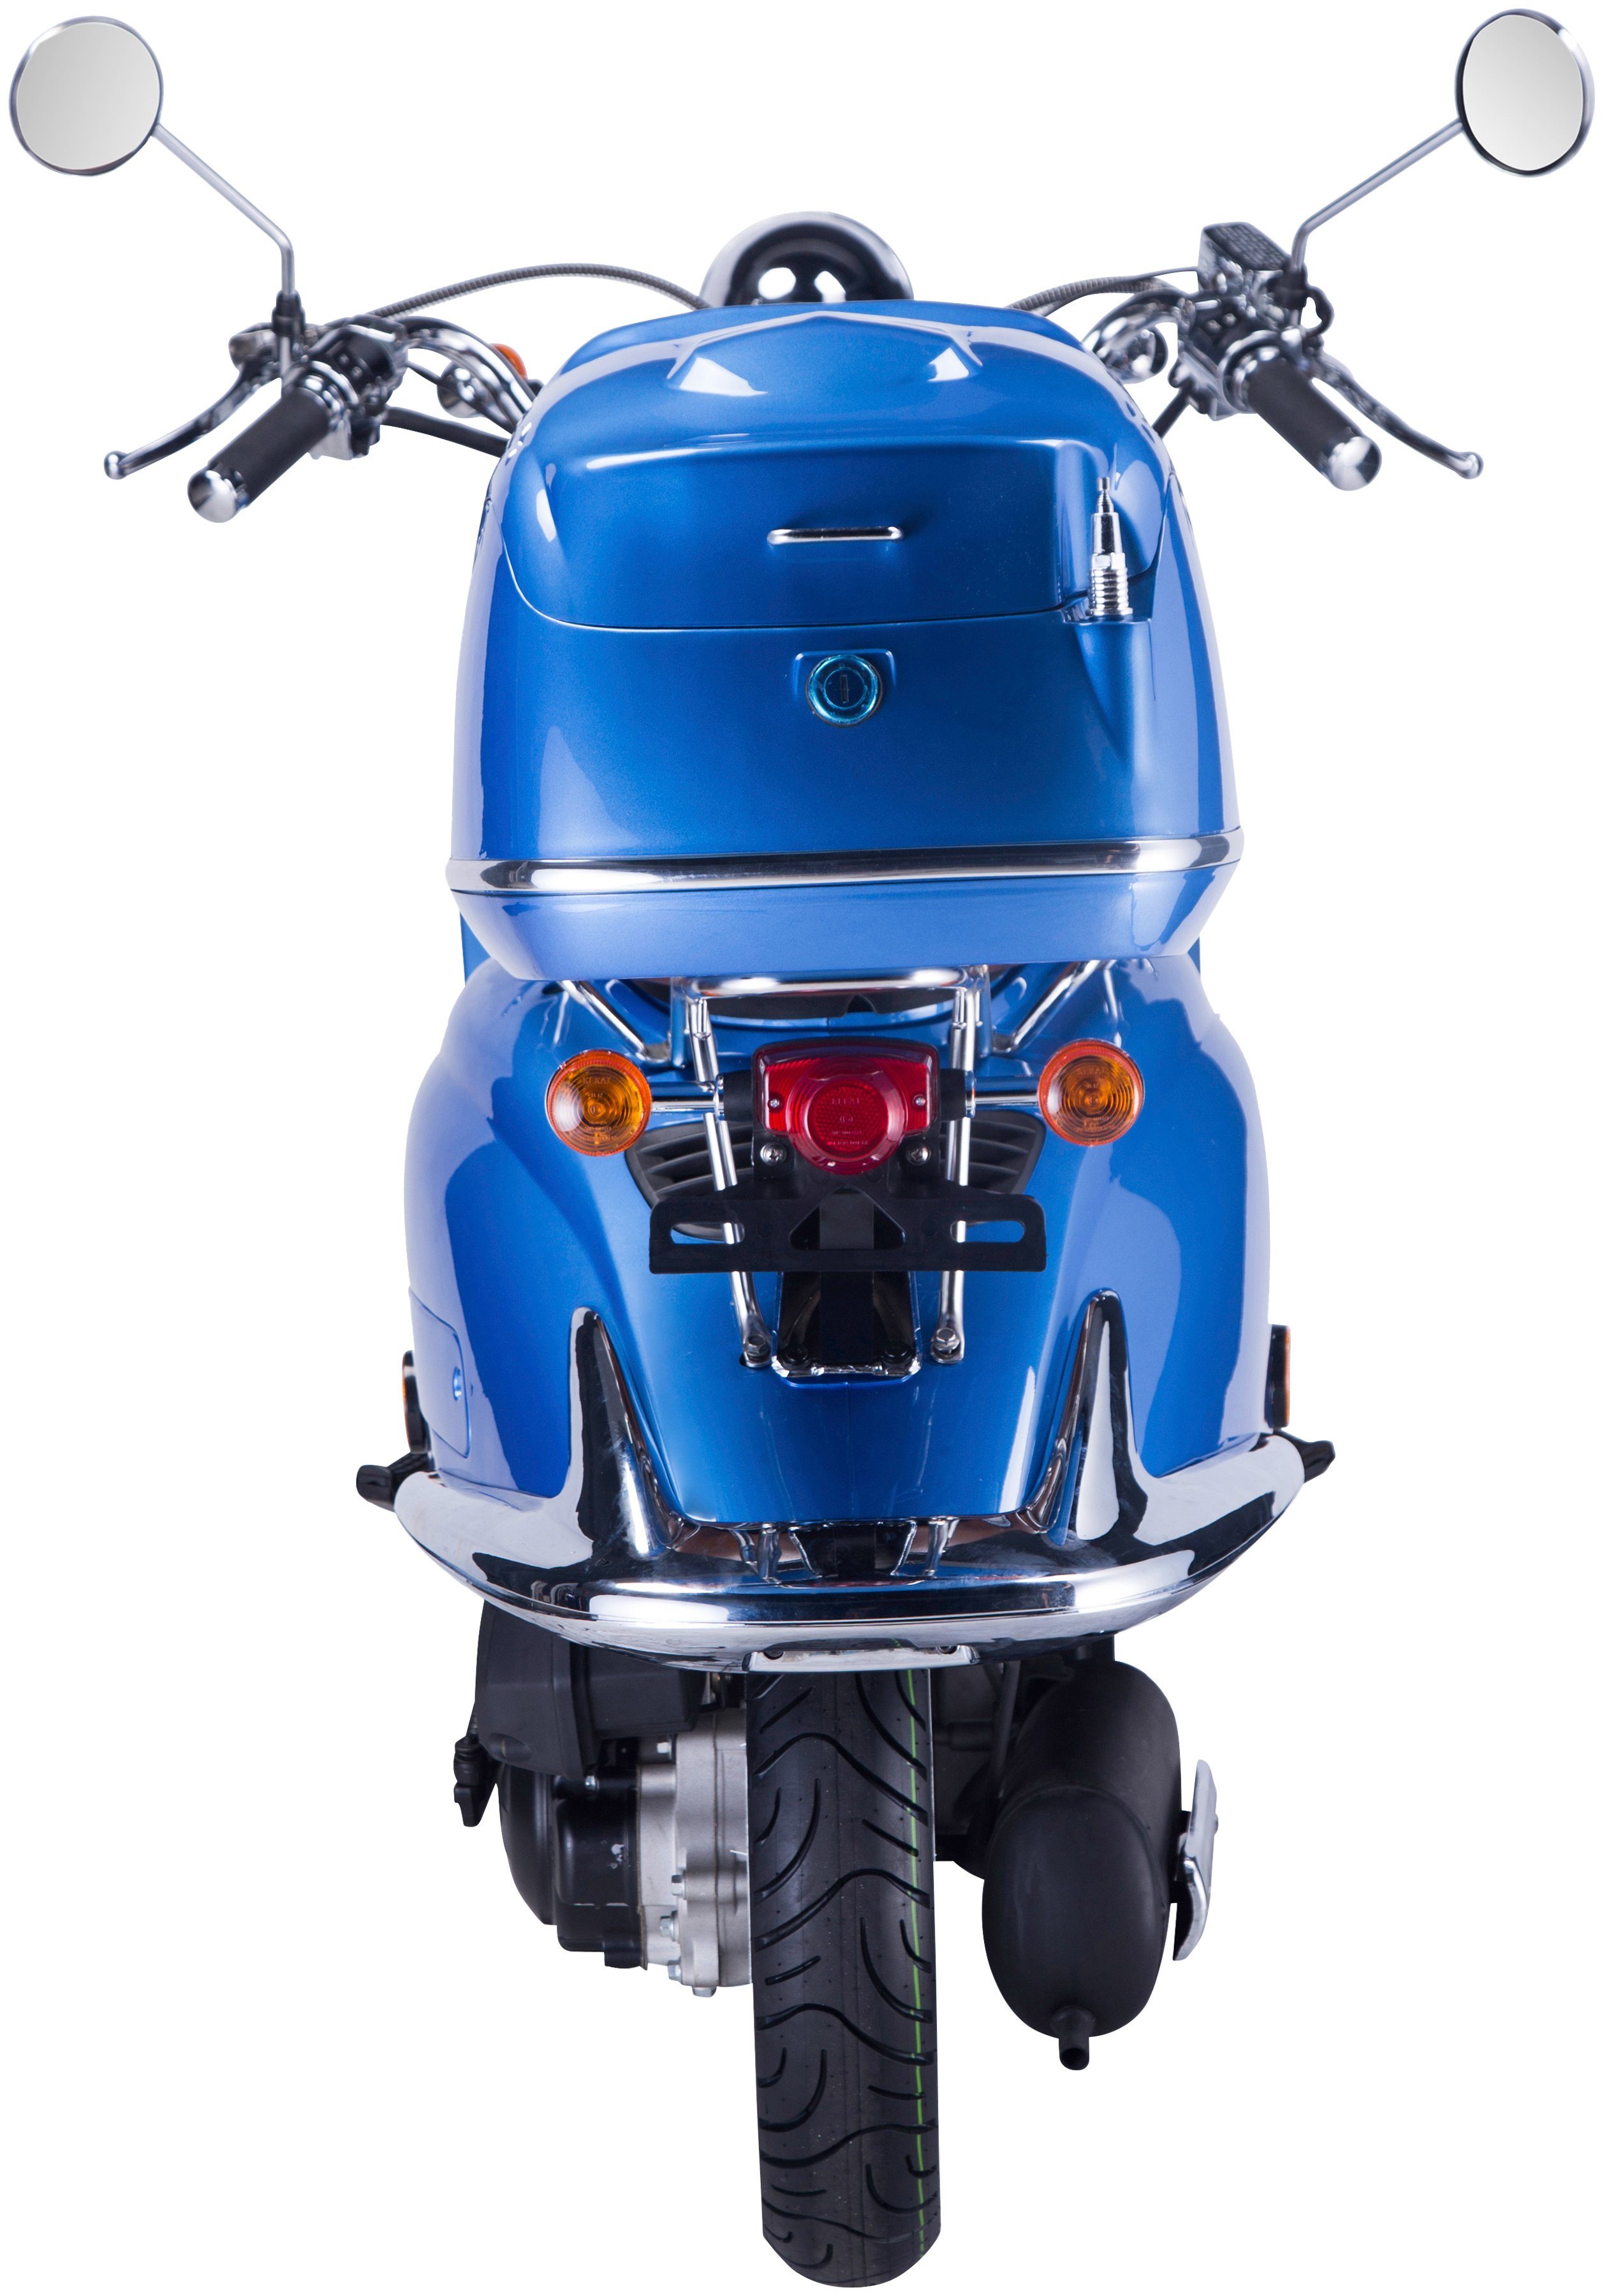 GT UNION Motorroller 5, 45 km/h, Topcase blau ccm, Strada, (Set), mit Euro 50